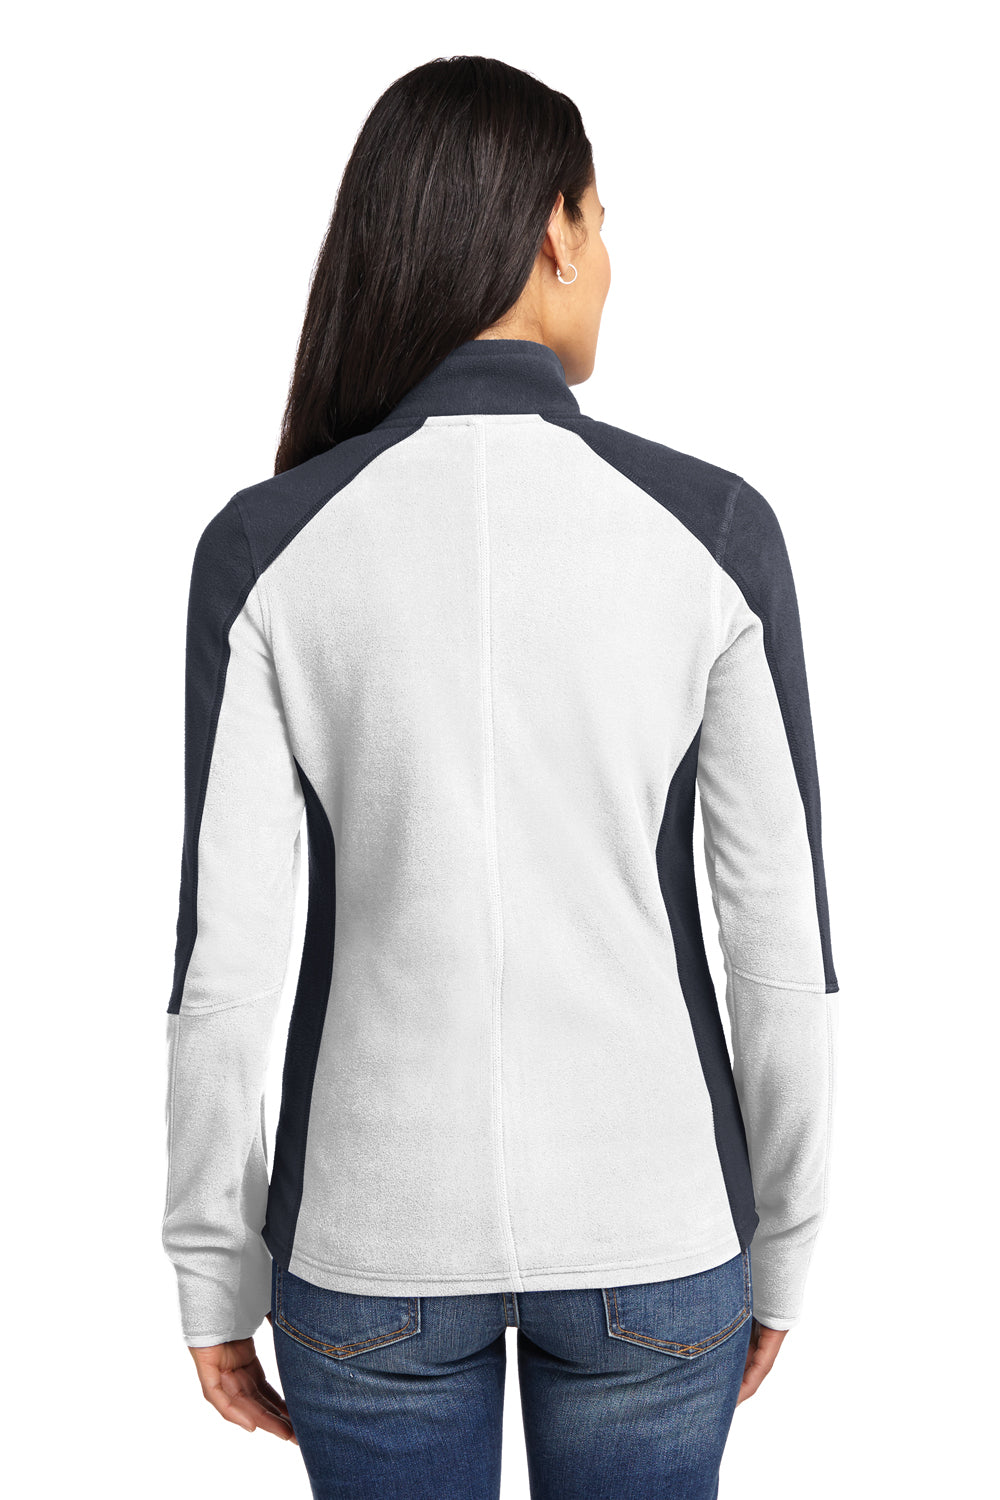 Port Authority L230 Womens Full Zip Microfleece Jacket White/Grey Back